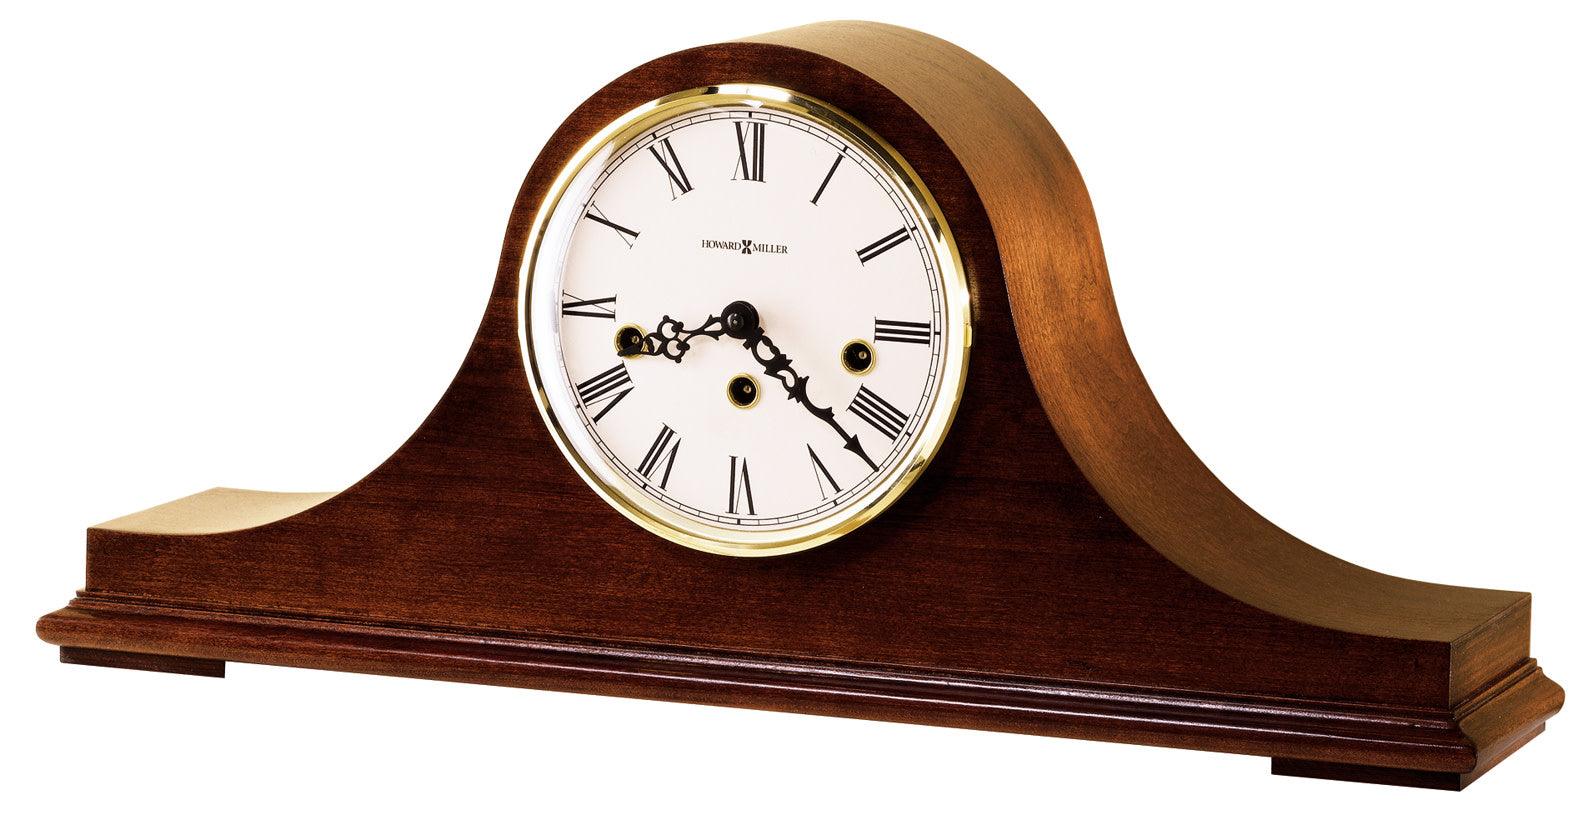 Howard Miller Desk and Table Clocks – Grandfather Clocks